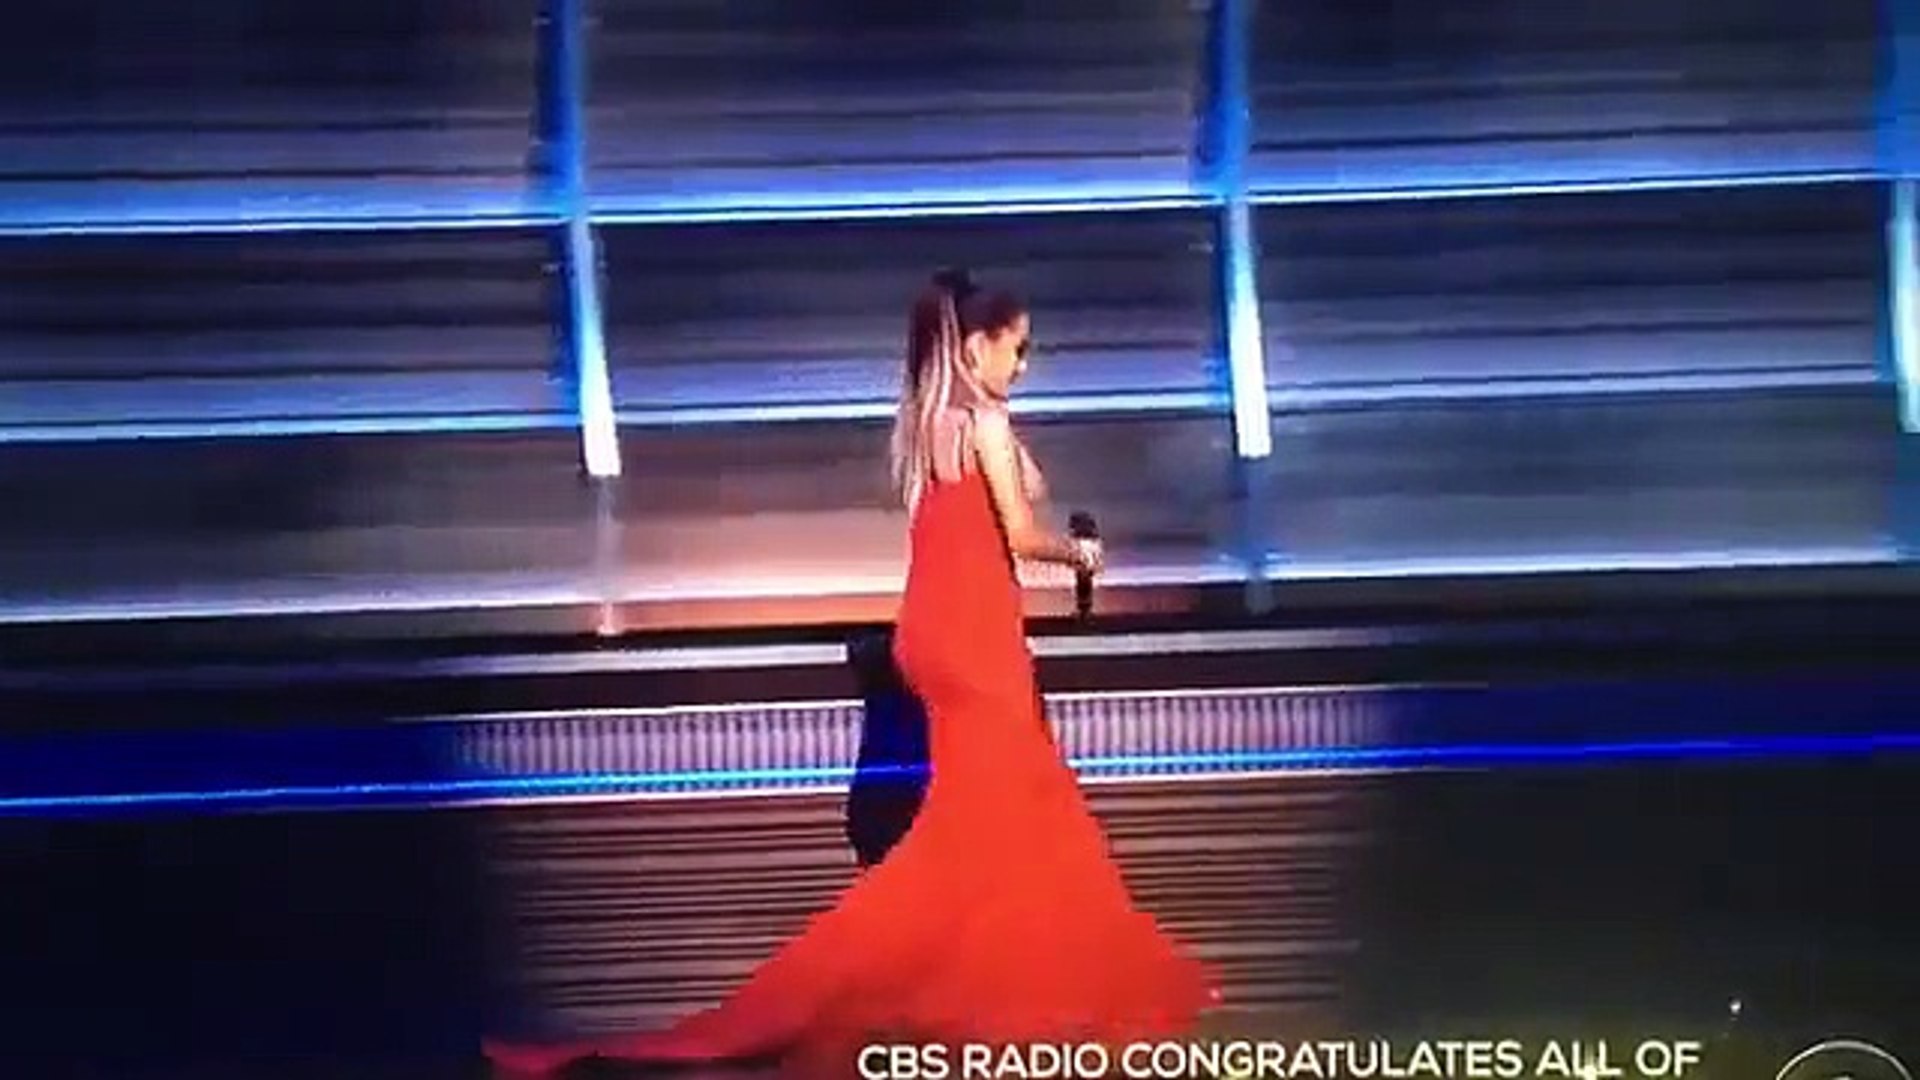 Ariana Grande Performance At Grammy Awards 2016 (VIDEO)